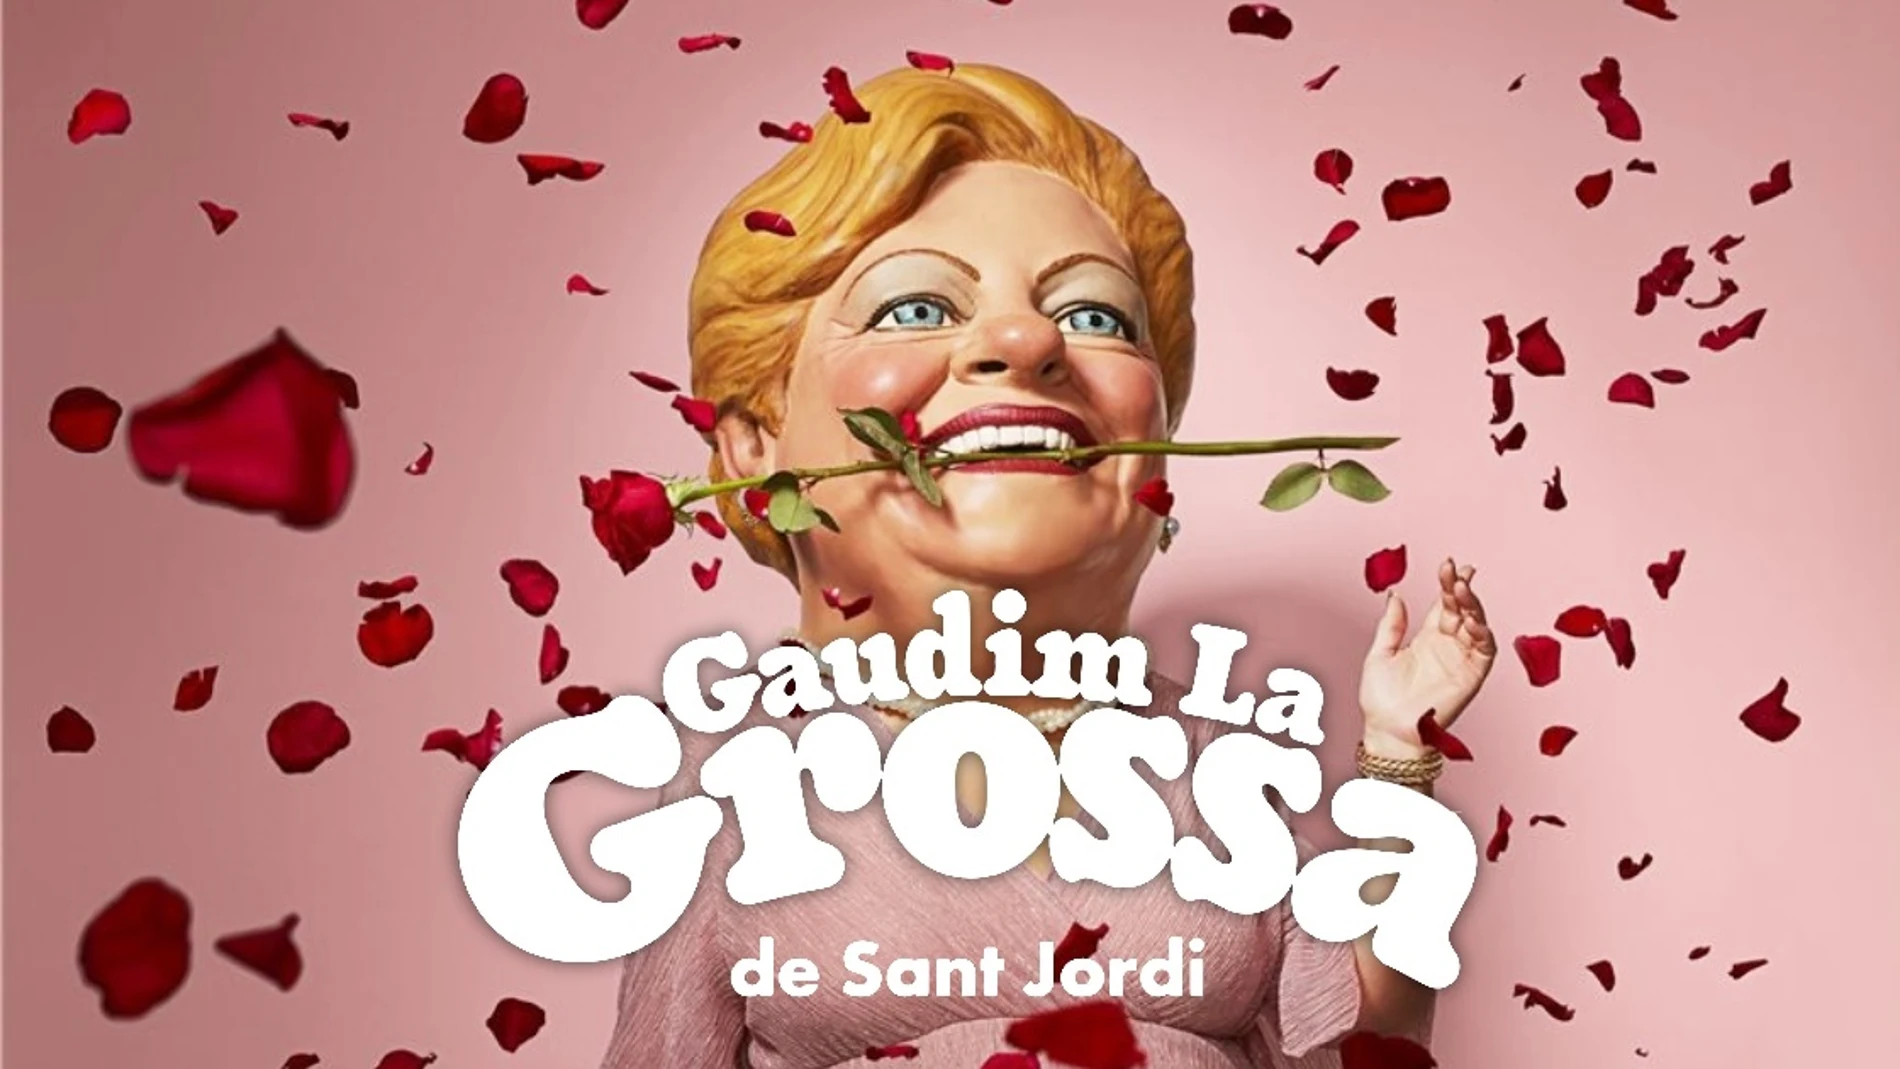 Los premios del sorteo de La Grossa de Sant Jordi 2022